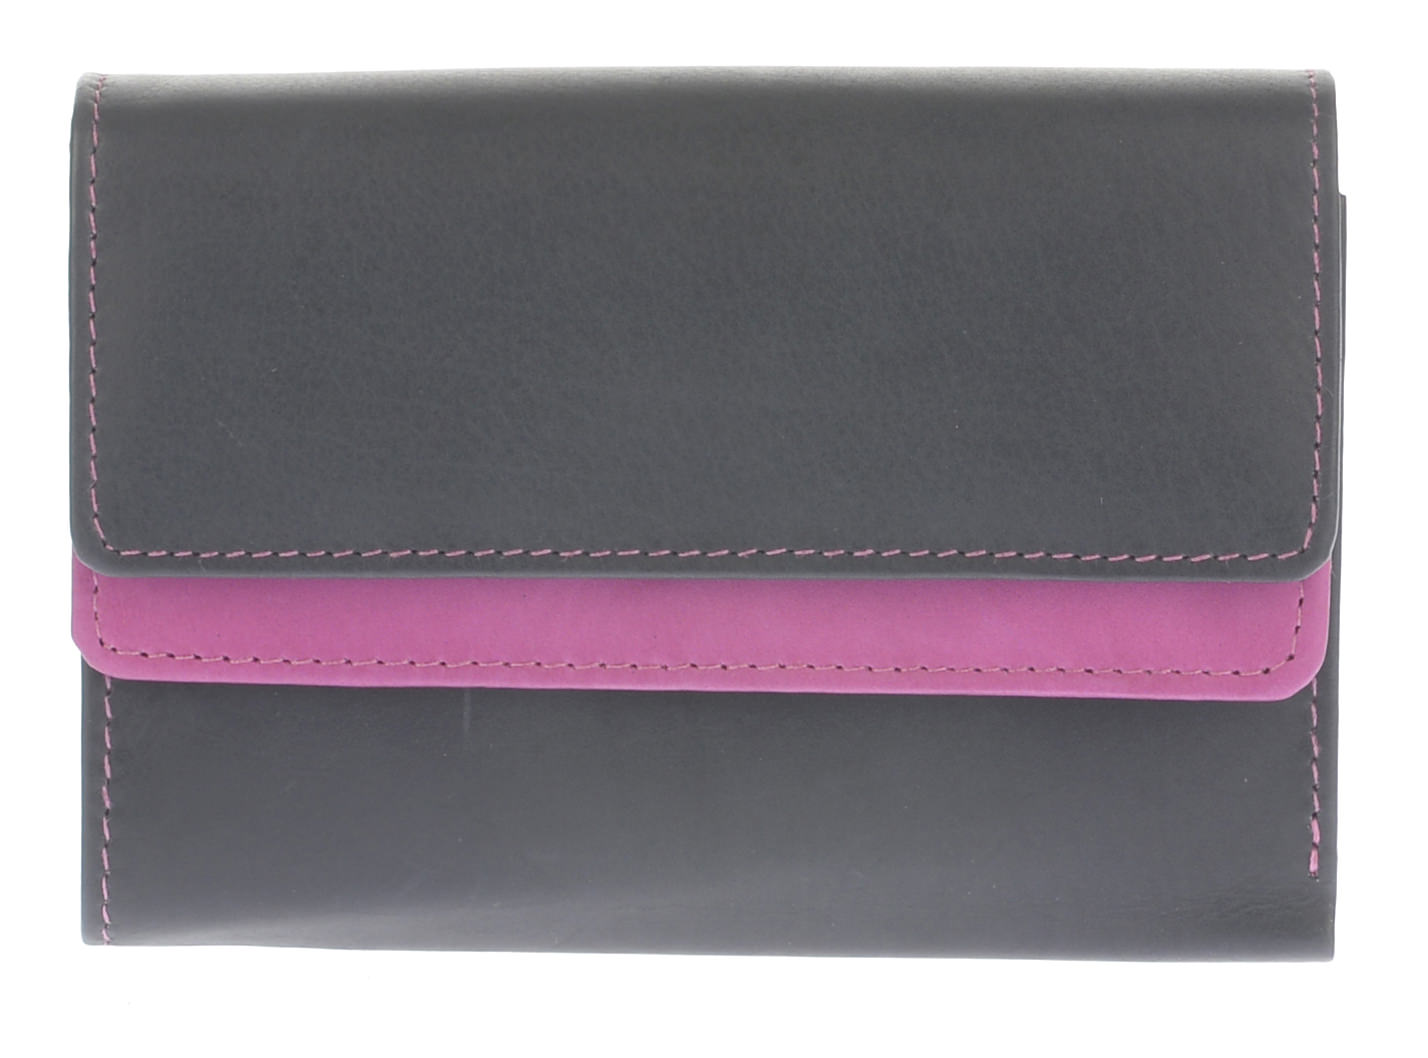 Ladies Wallet Purse - Golunski Leather Goods